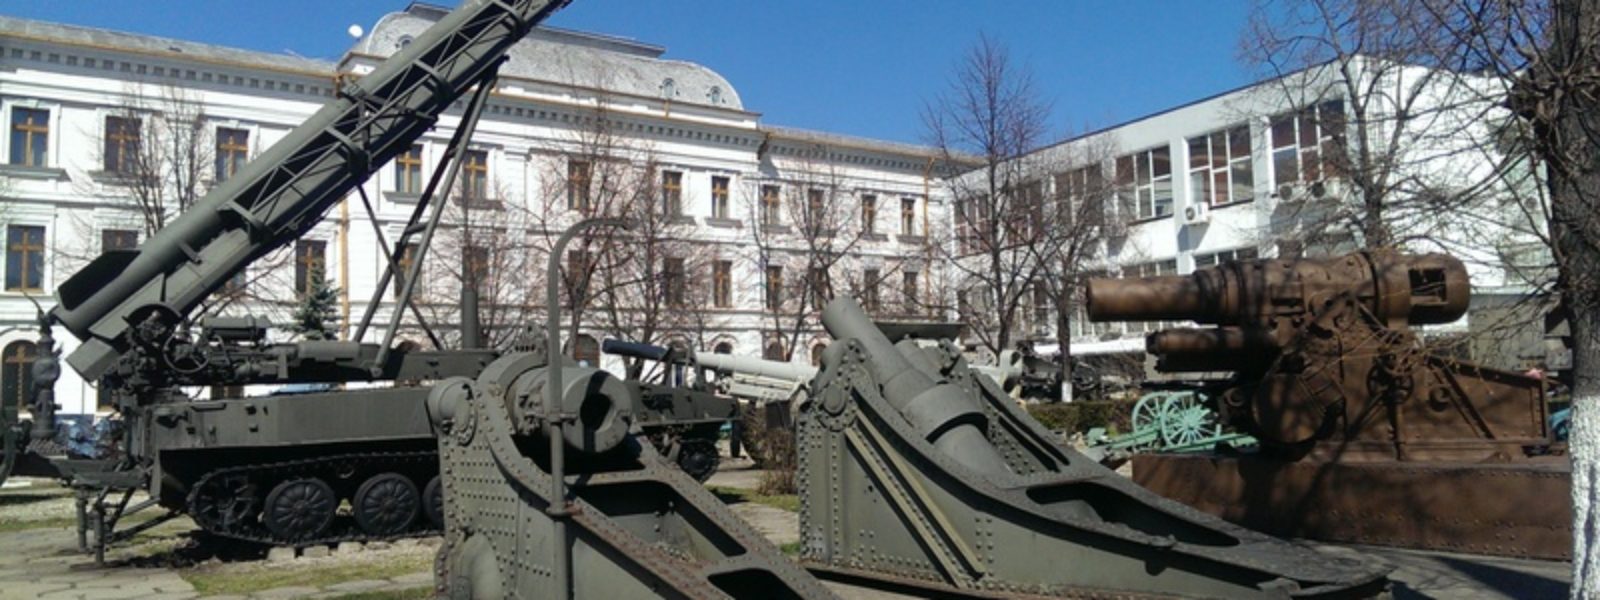 Muzeul Militar National